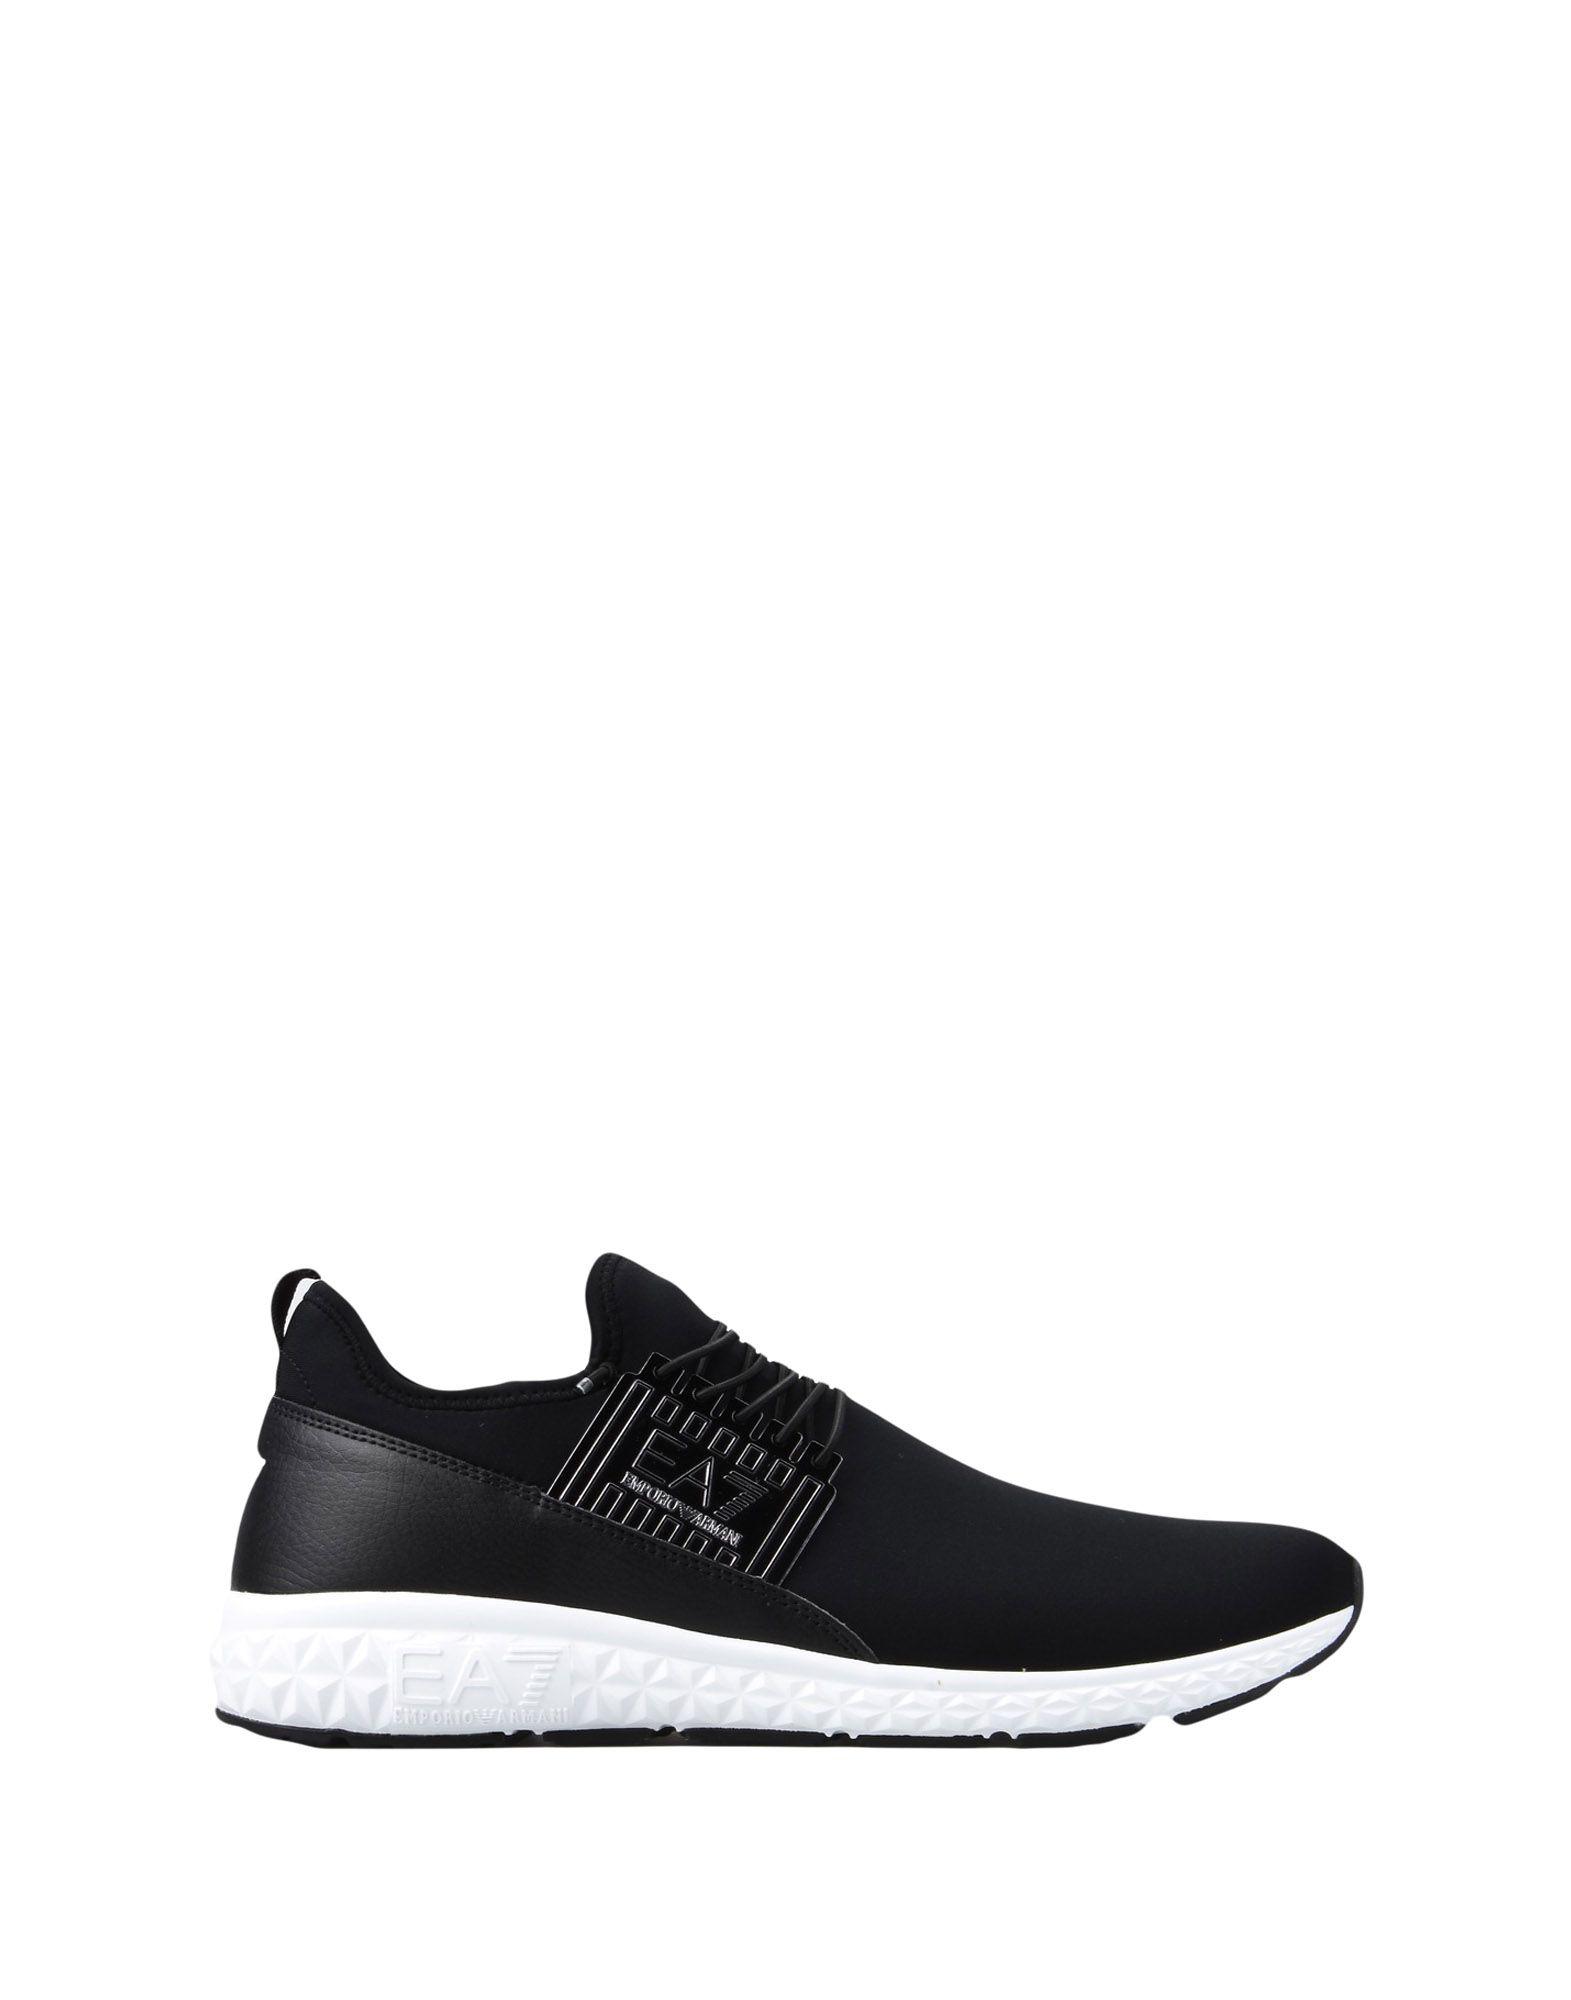 EA7 Low-tops & Sneakers in Black for Men - Lyst